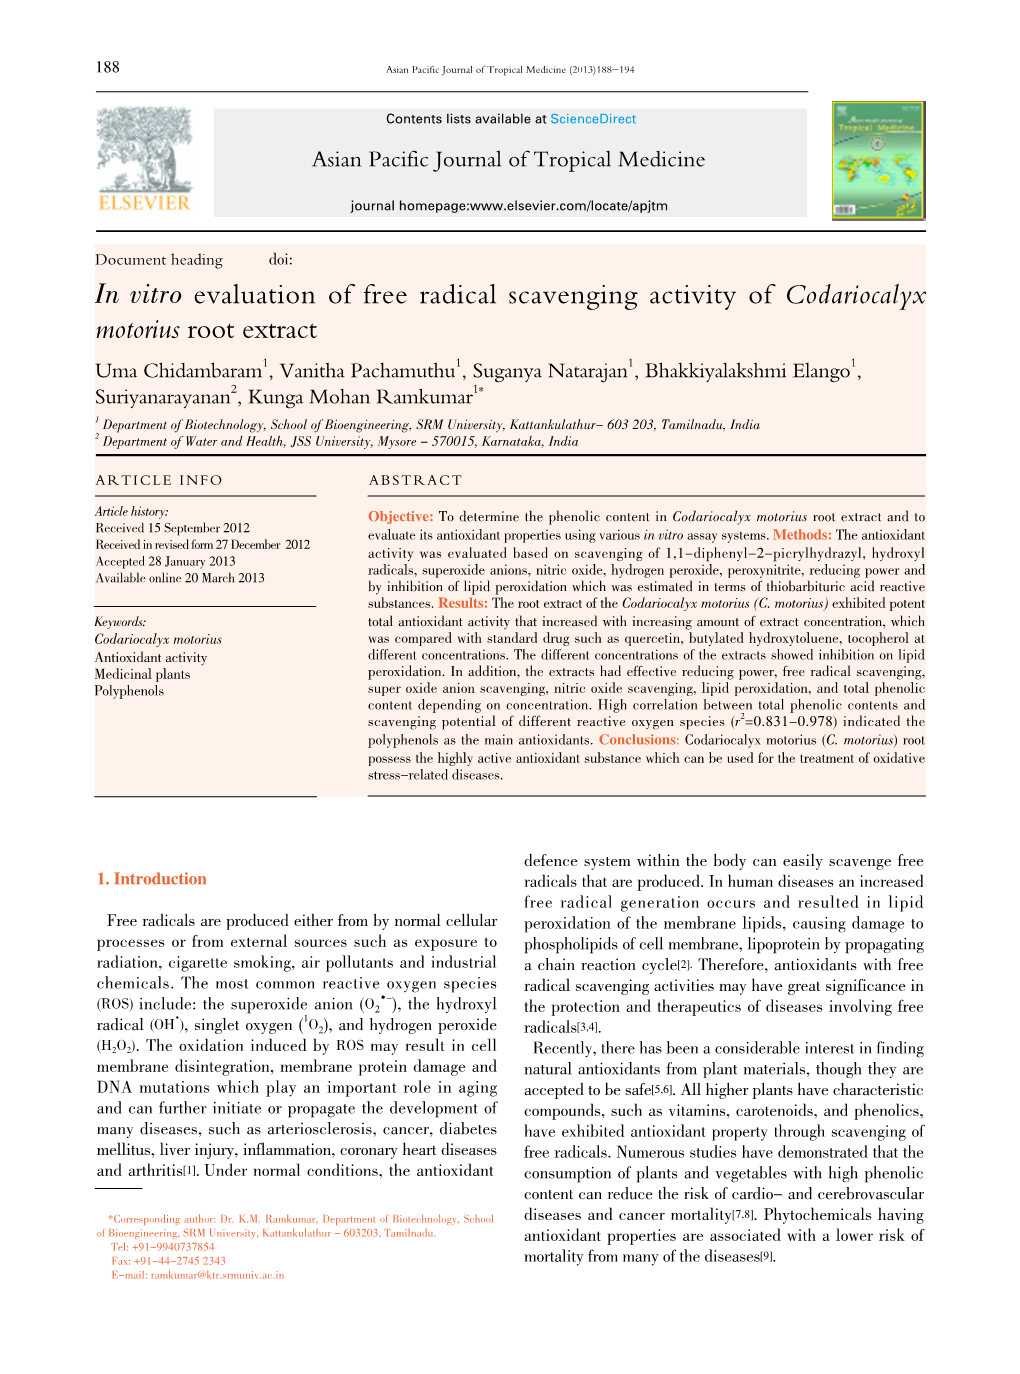 In Vitro Evaluation of Free Radical Scavenging Activity of Codariocalyx Motorius Root Extract